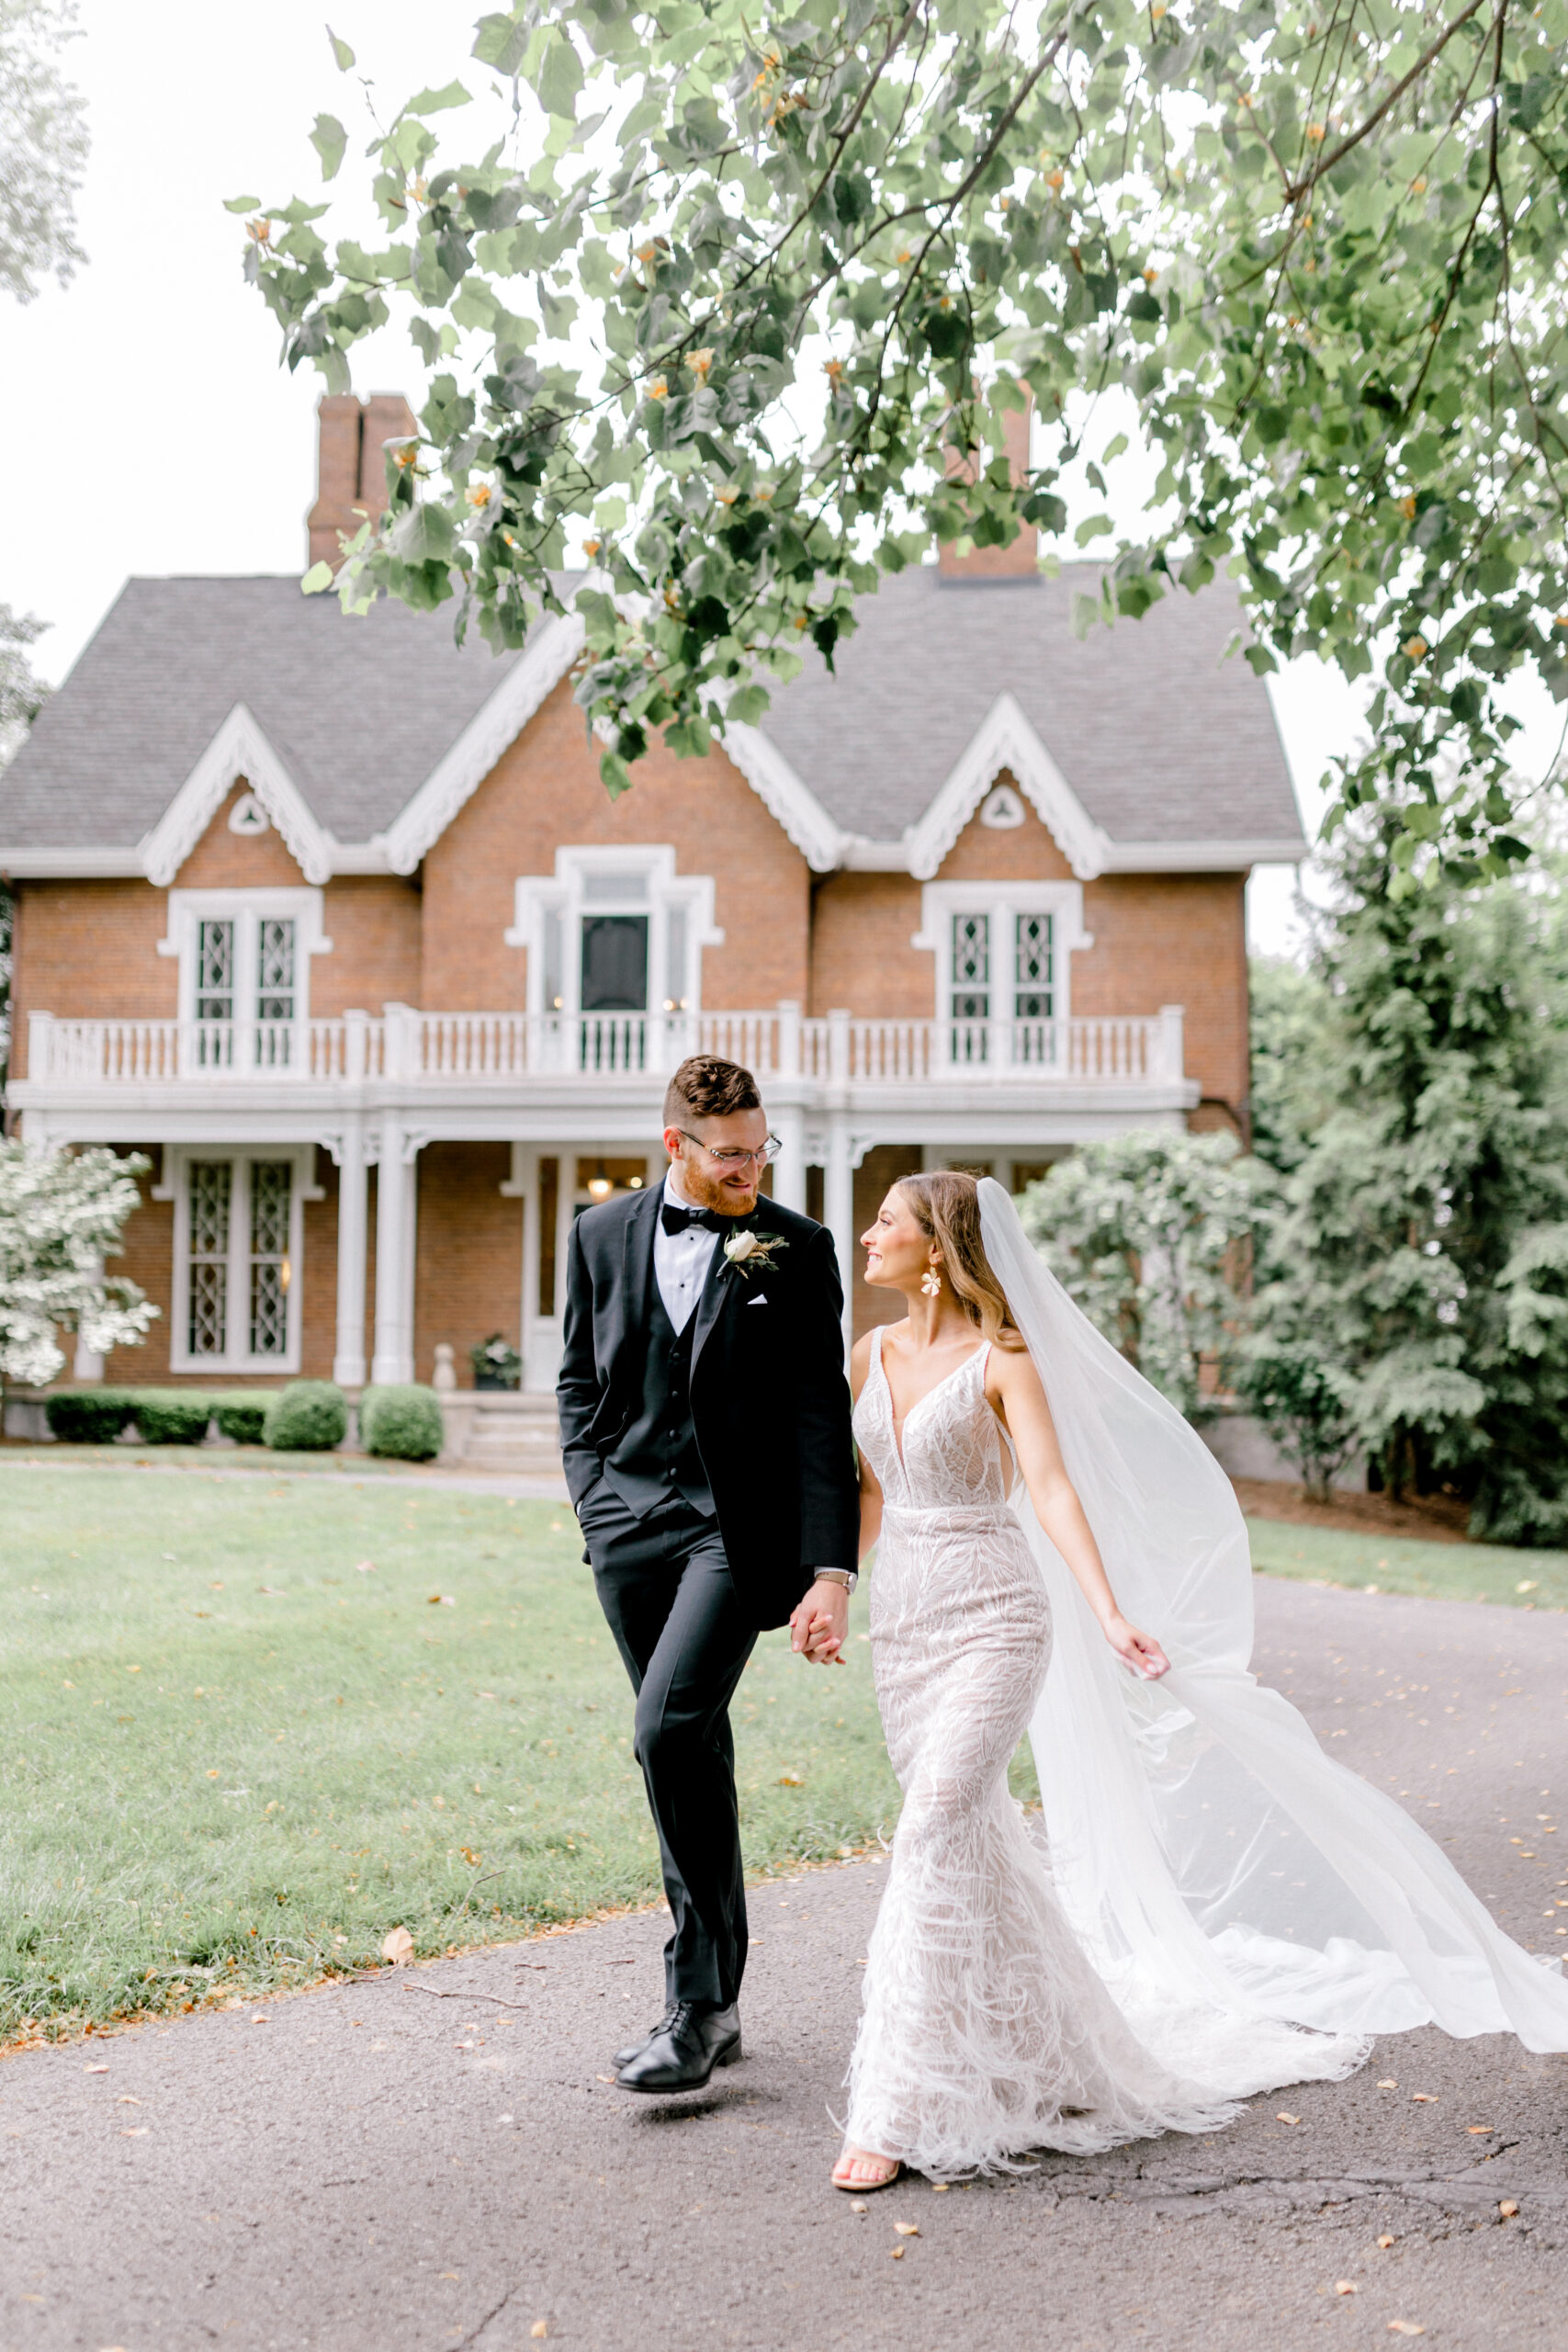 Warrenwood Manor – Kentucky Wedding Venue